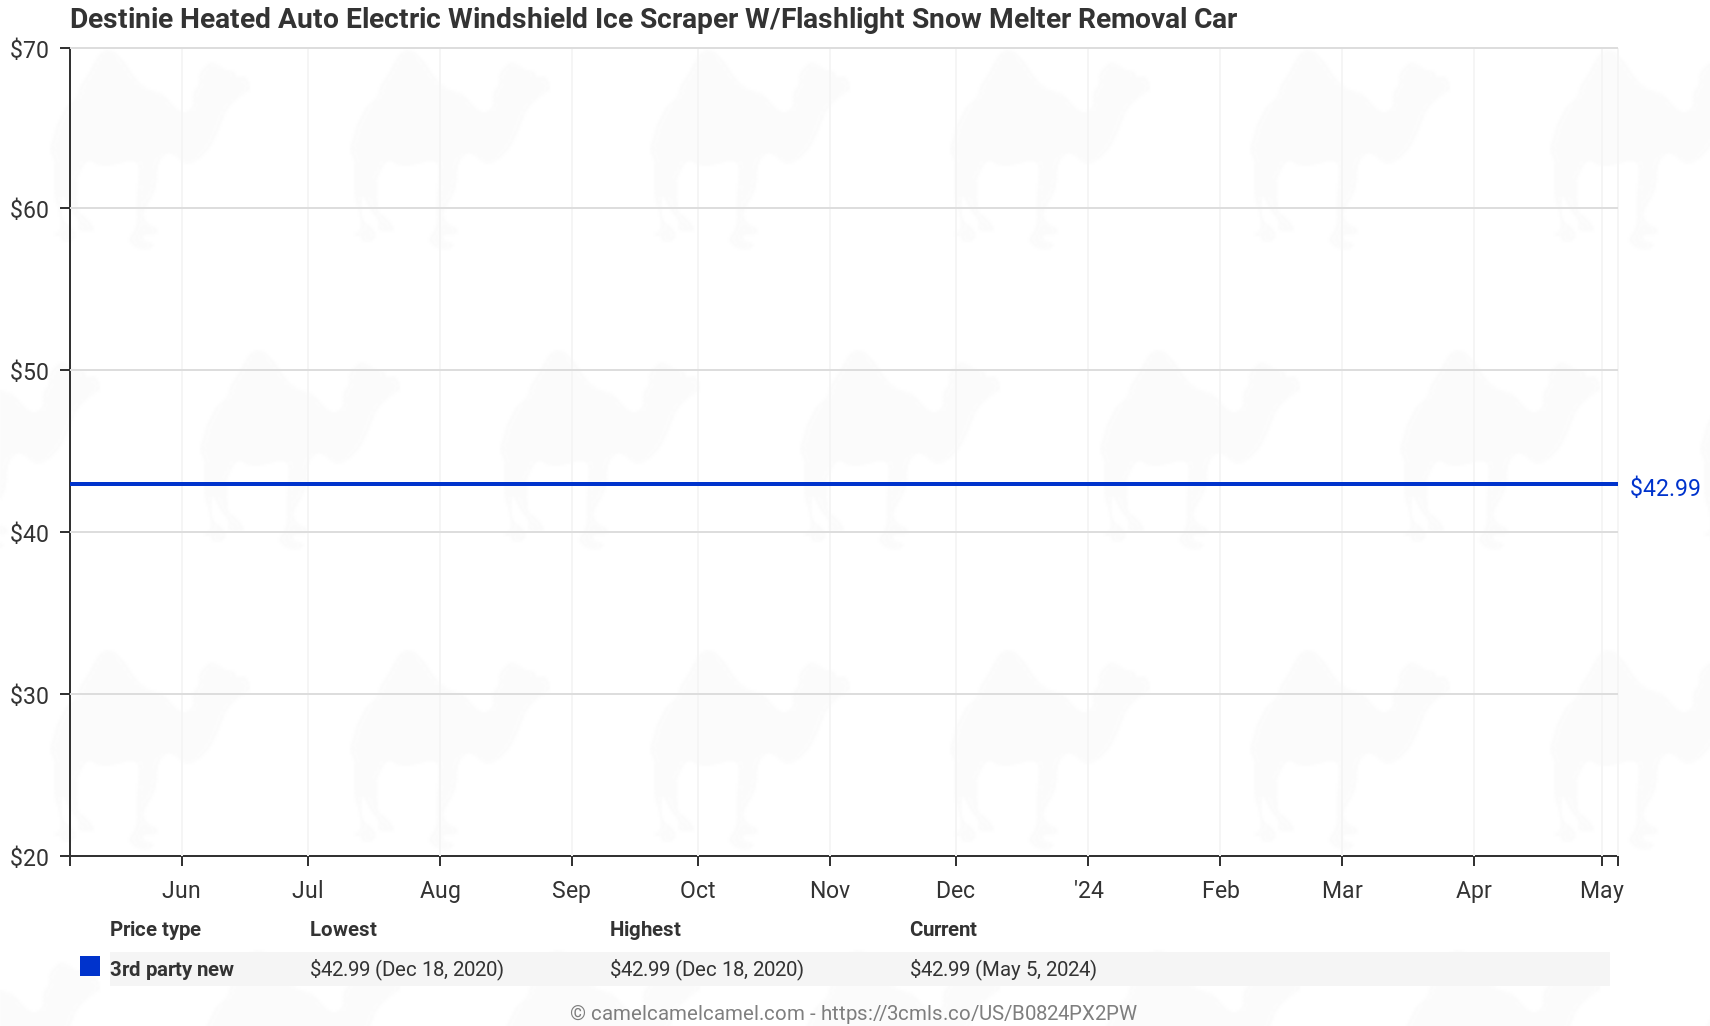 Destinie Heated Auto Electric Windshield Ice Scraper W/Flashlight Snow Melter Removal Car - Price History: B0824PX2PW